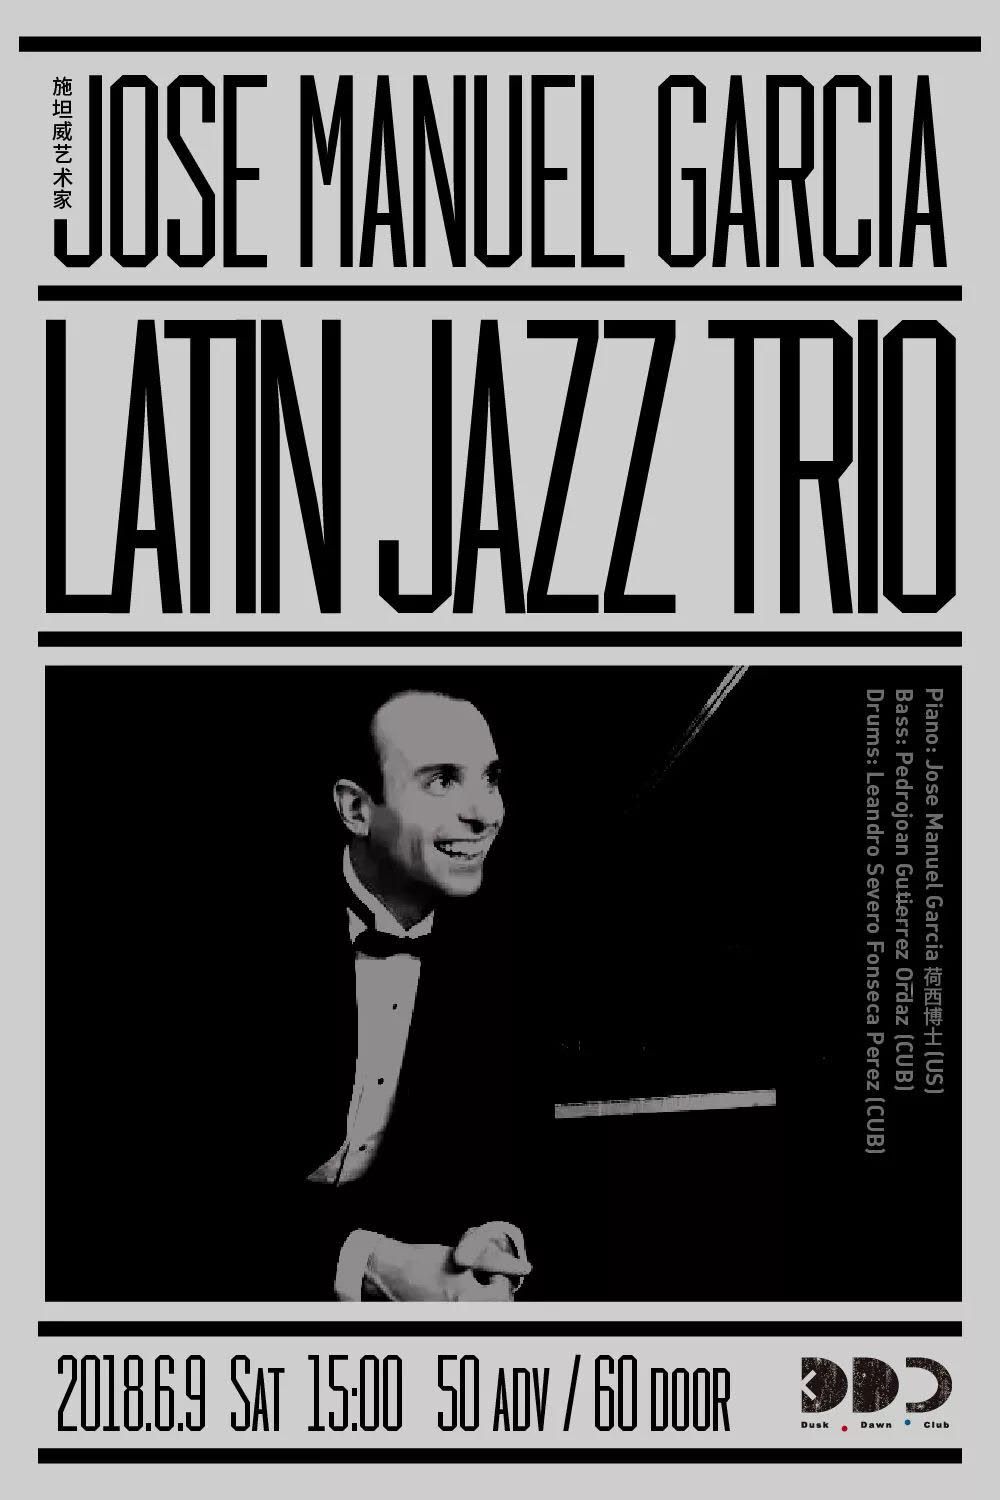 Latin Jazz Trio